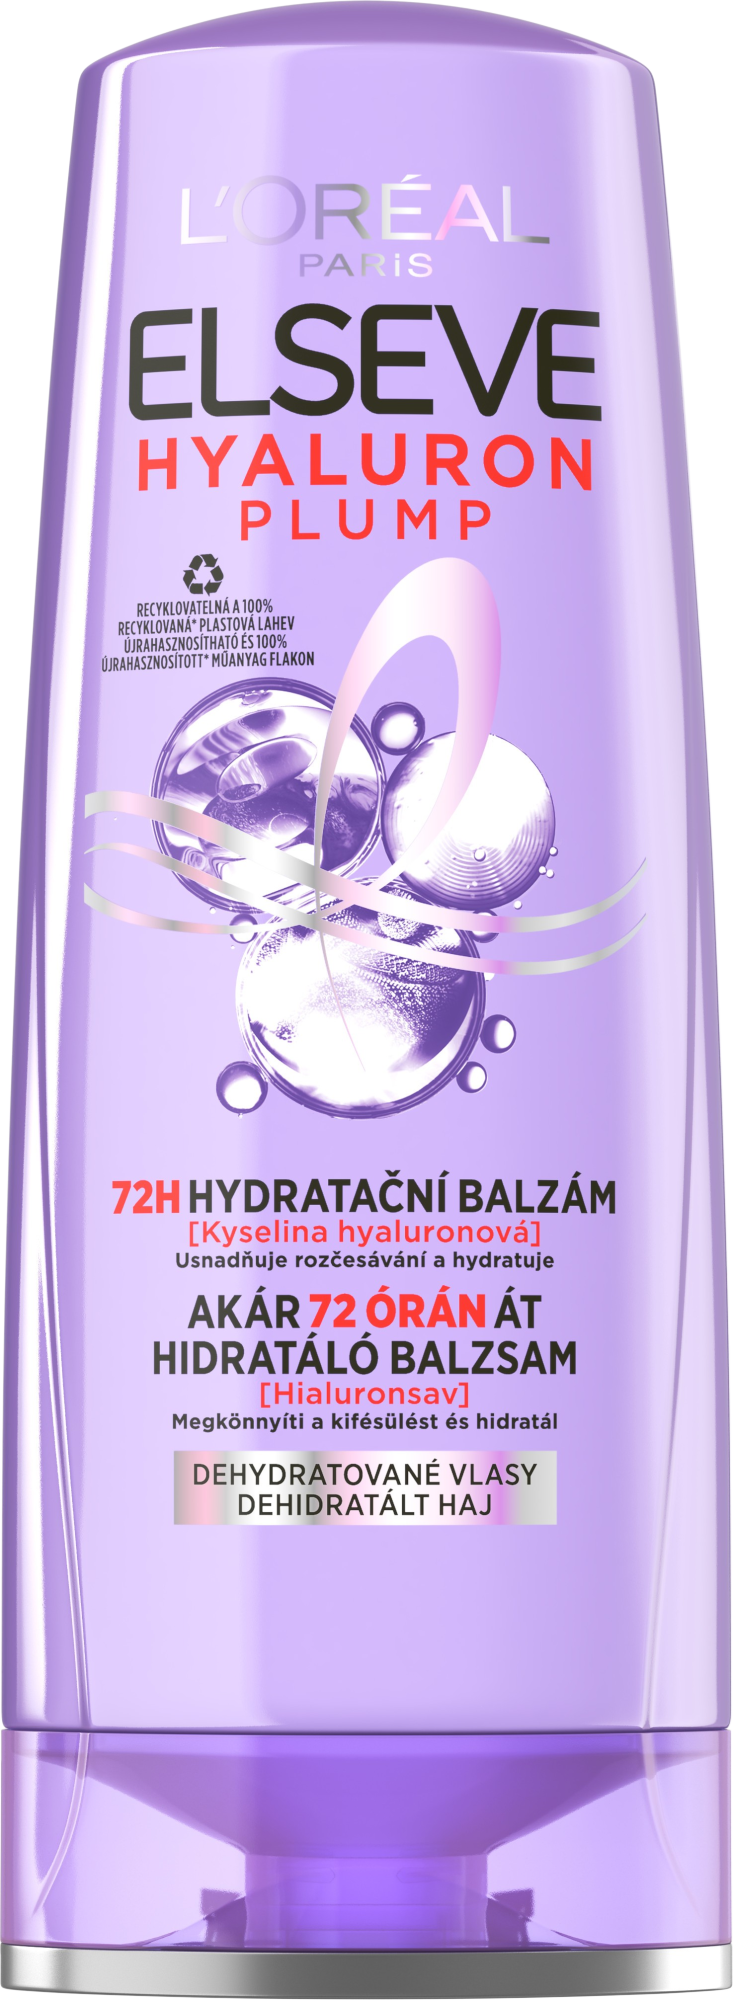 L'Oréal Paris Elseve balzam hydratačný Hyaluron Plump 72H, 300 ml